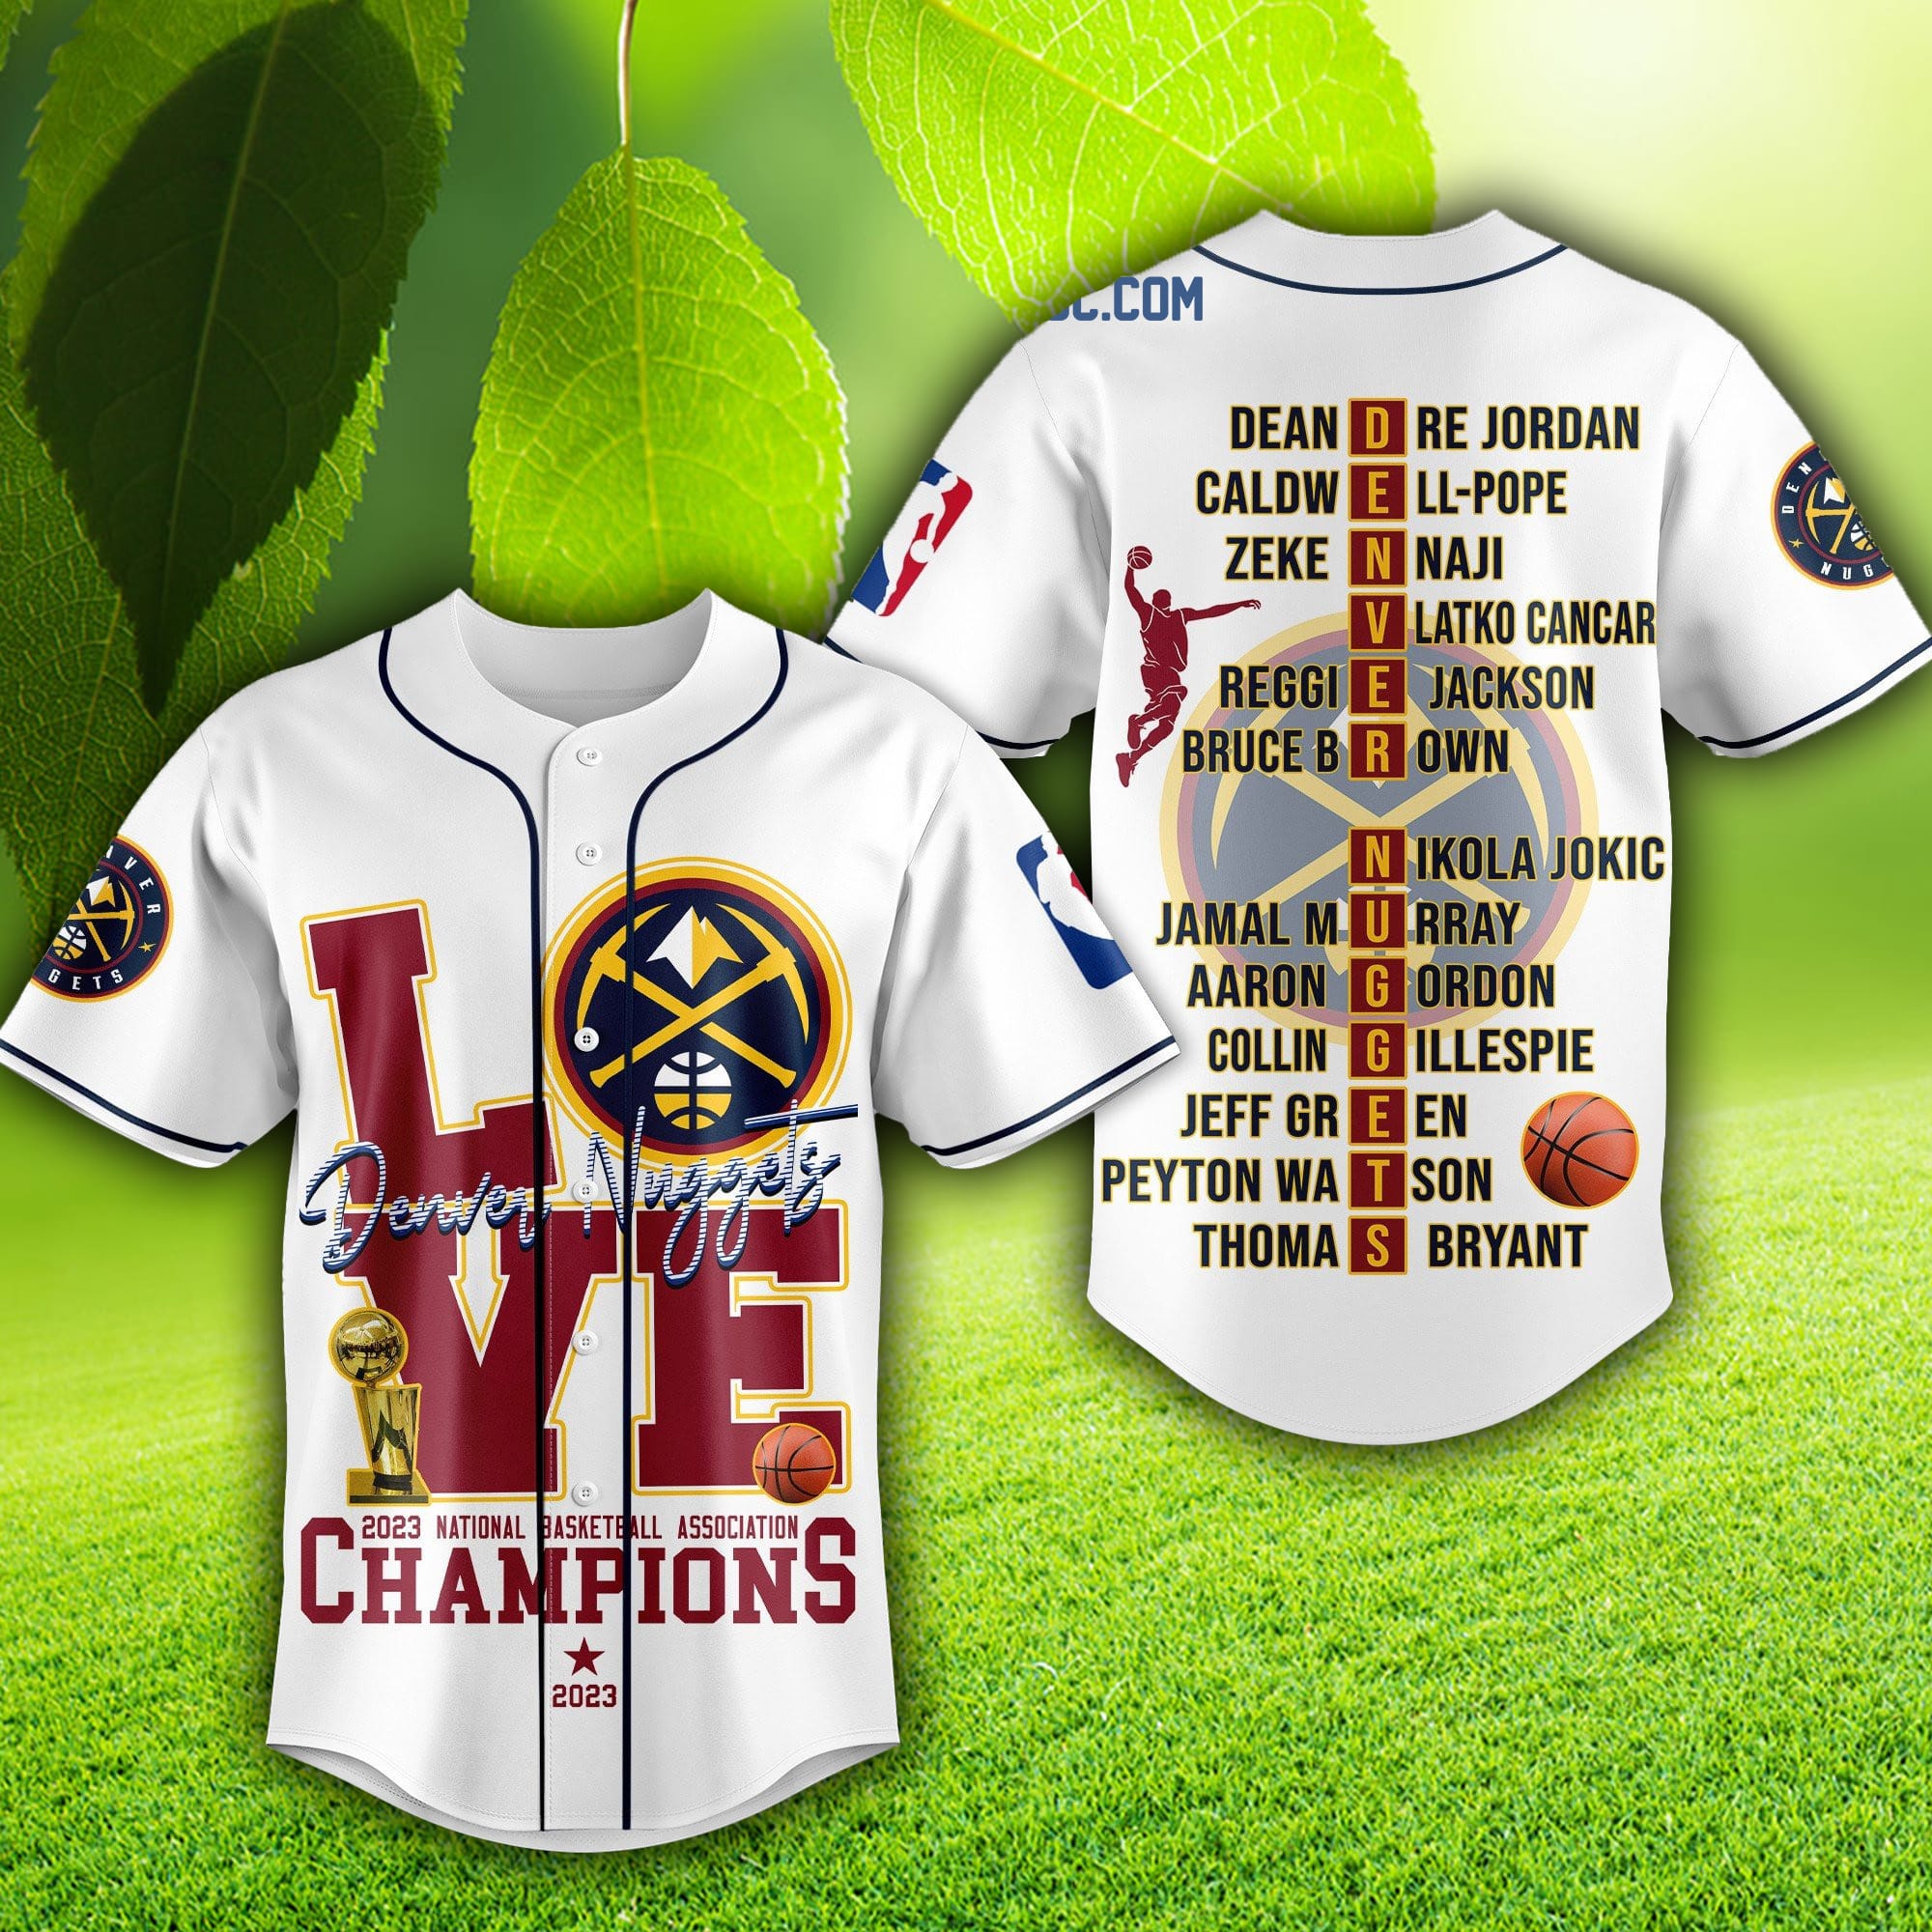 Denver Nuggets Love Team 2023 National Basketball Association Champions  White Design Baseball Jersey - Growkoc